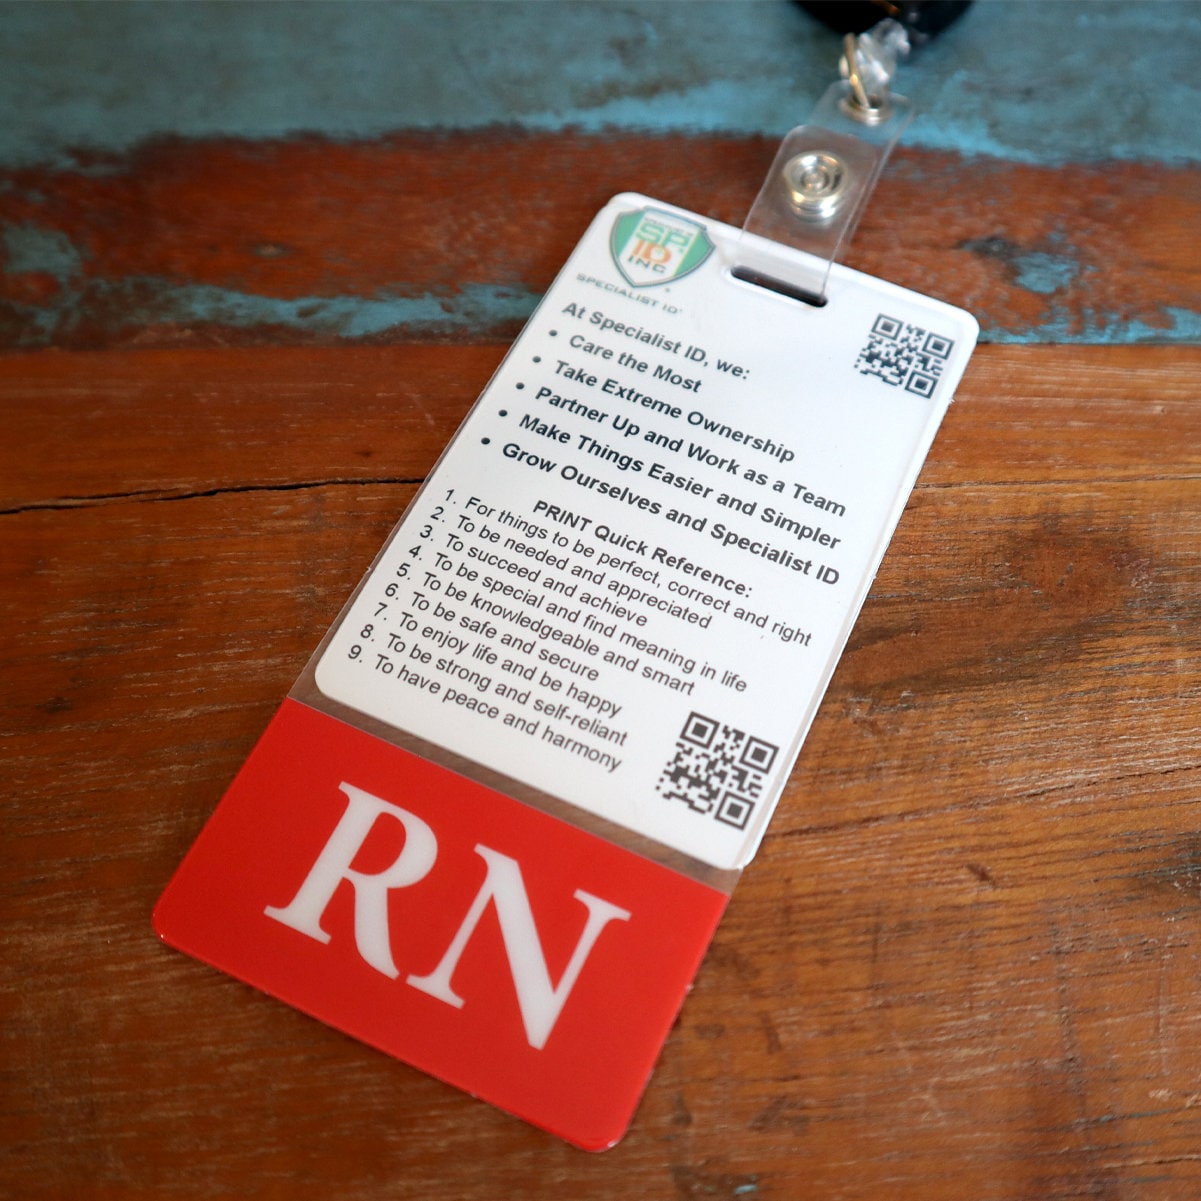 Clear Nurse Badge Buddy RN, LPN, Lvn, RN BSN, Physician, and CNA Vertical Badge Buddy ID Backer